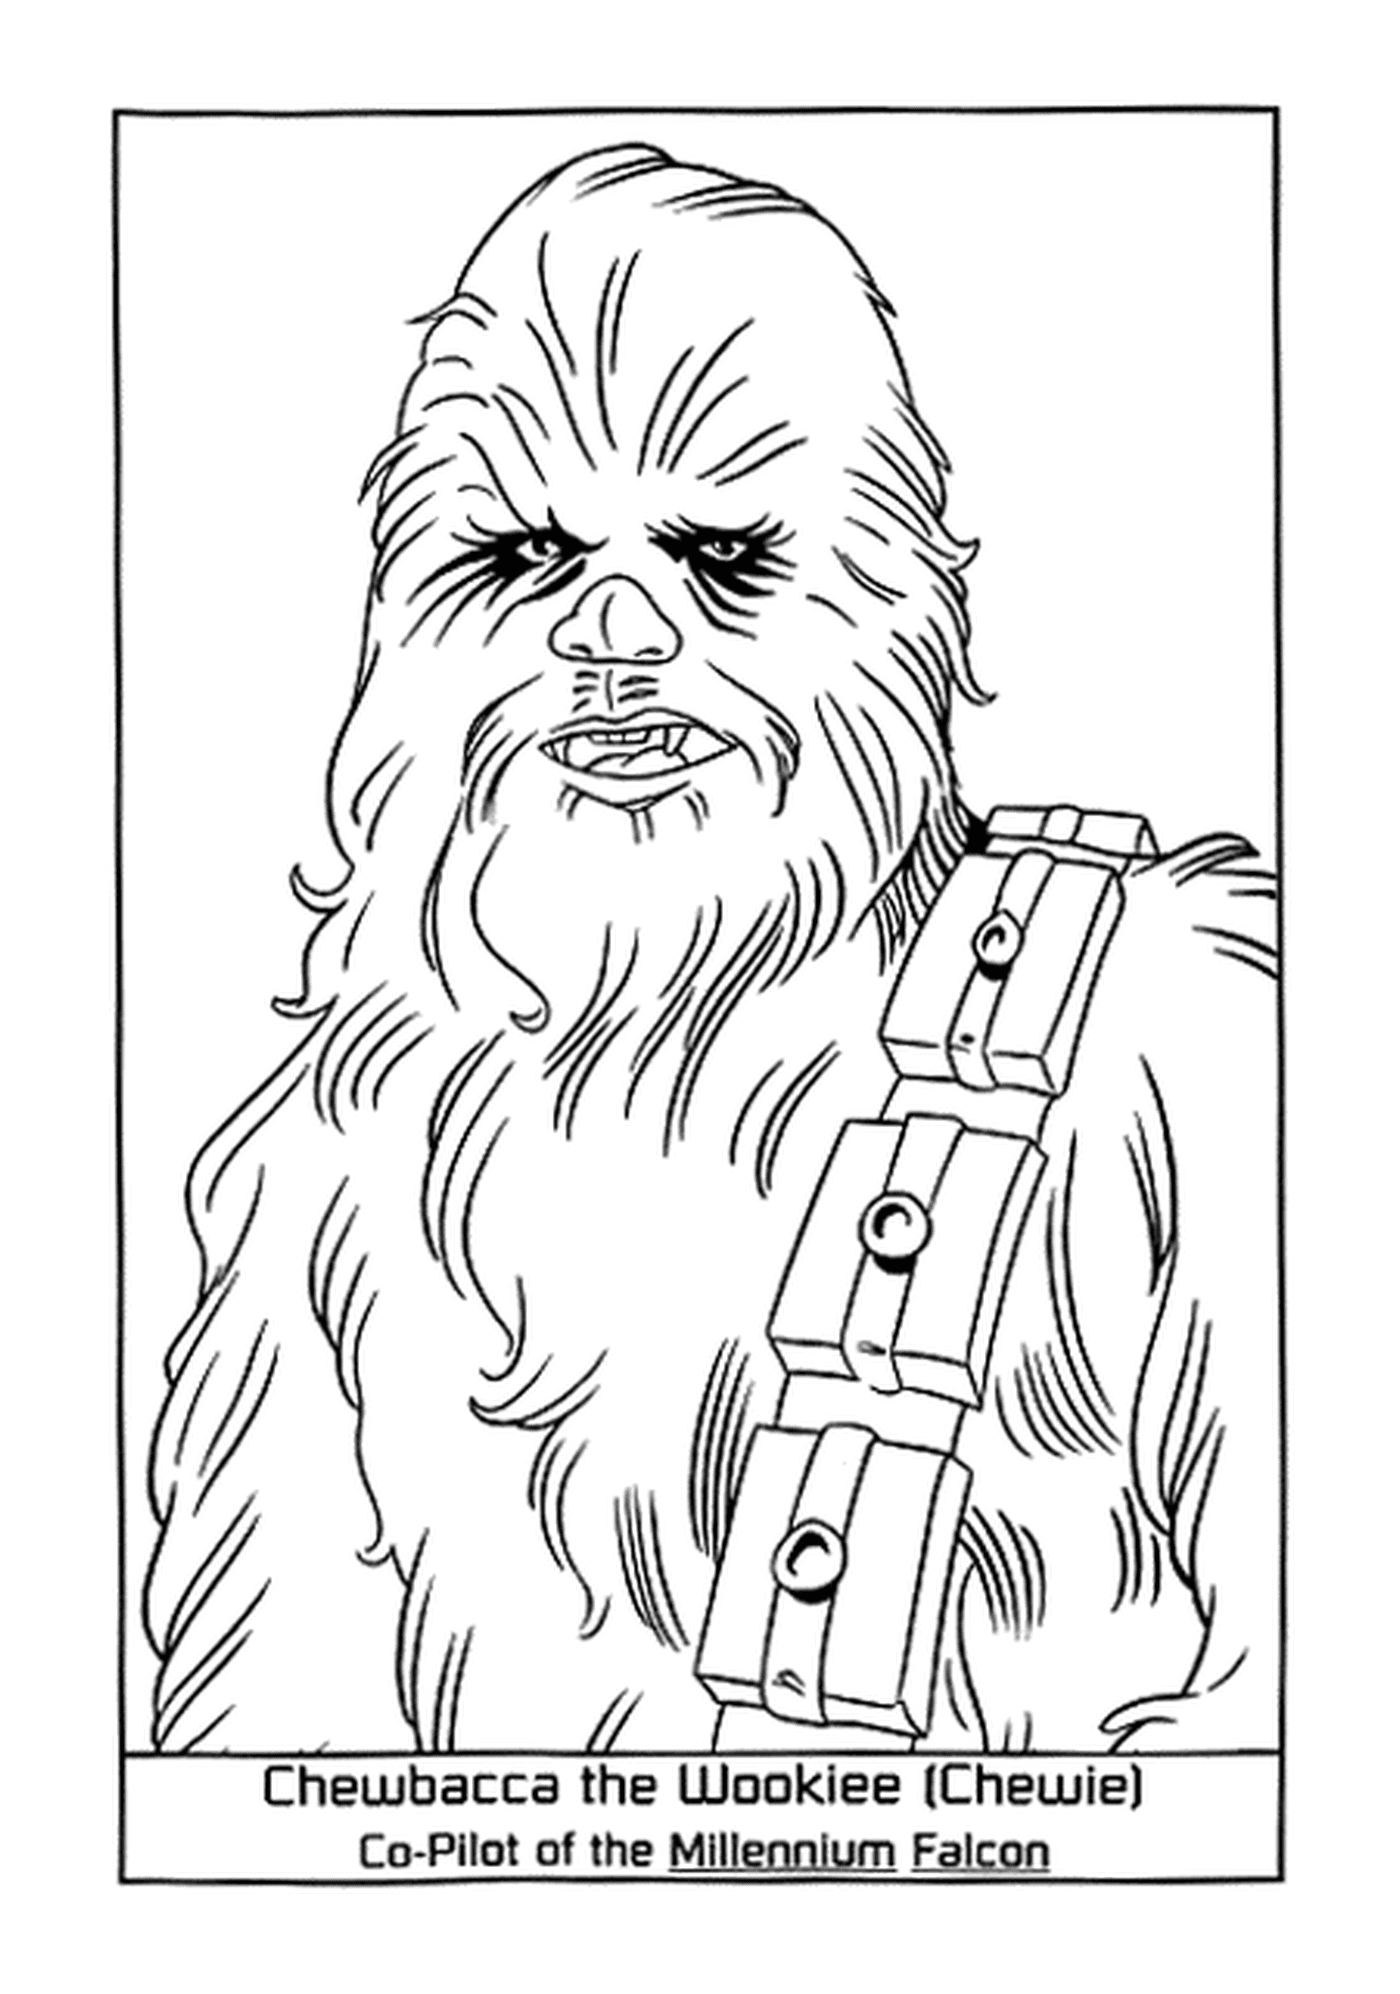   Le fidèle Chewbacca Wookiee 